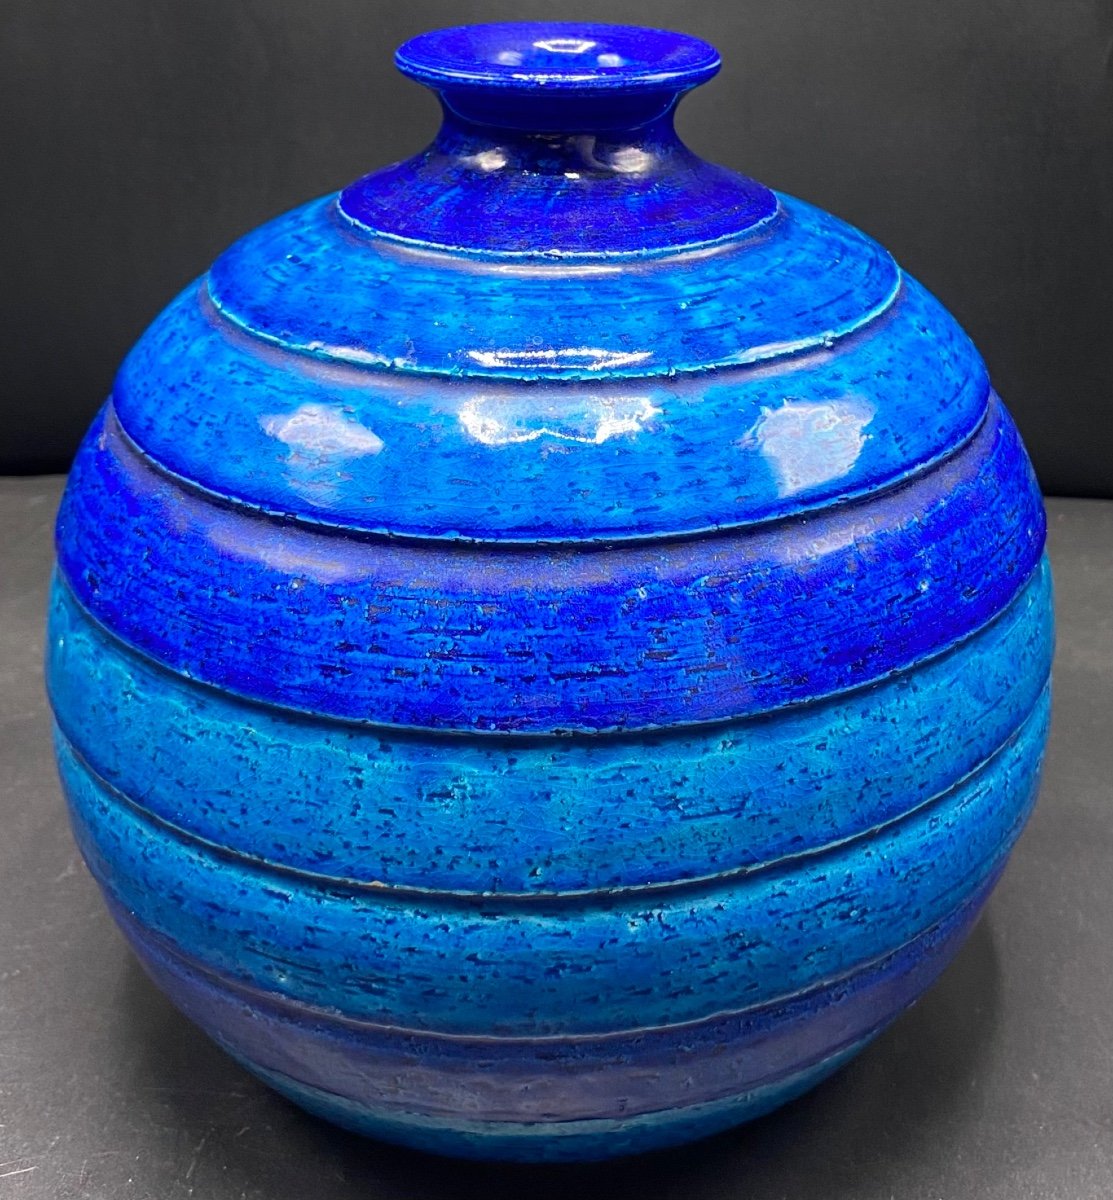 Glazed Terracotta Ball Vase By Aldo Longi From The 1930s